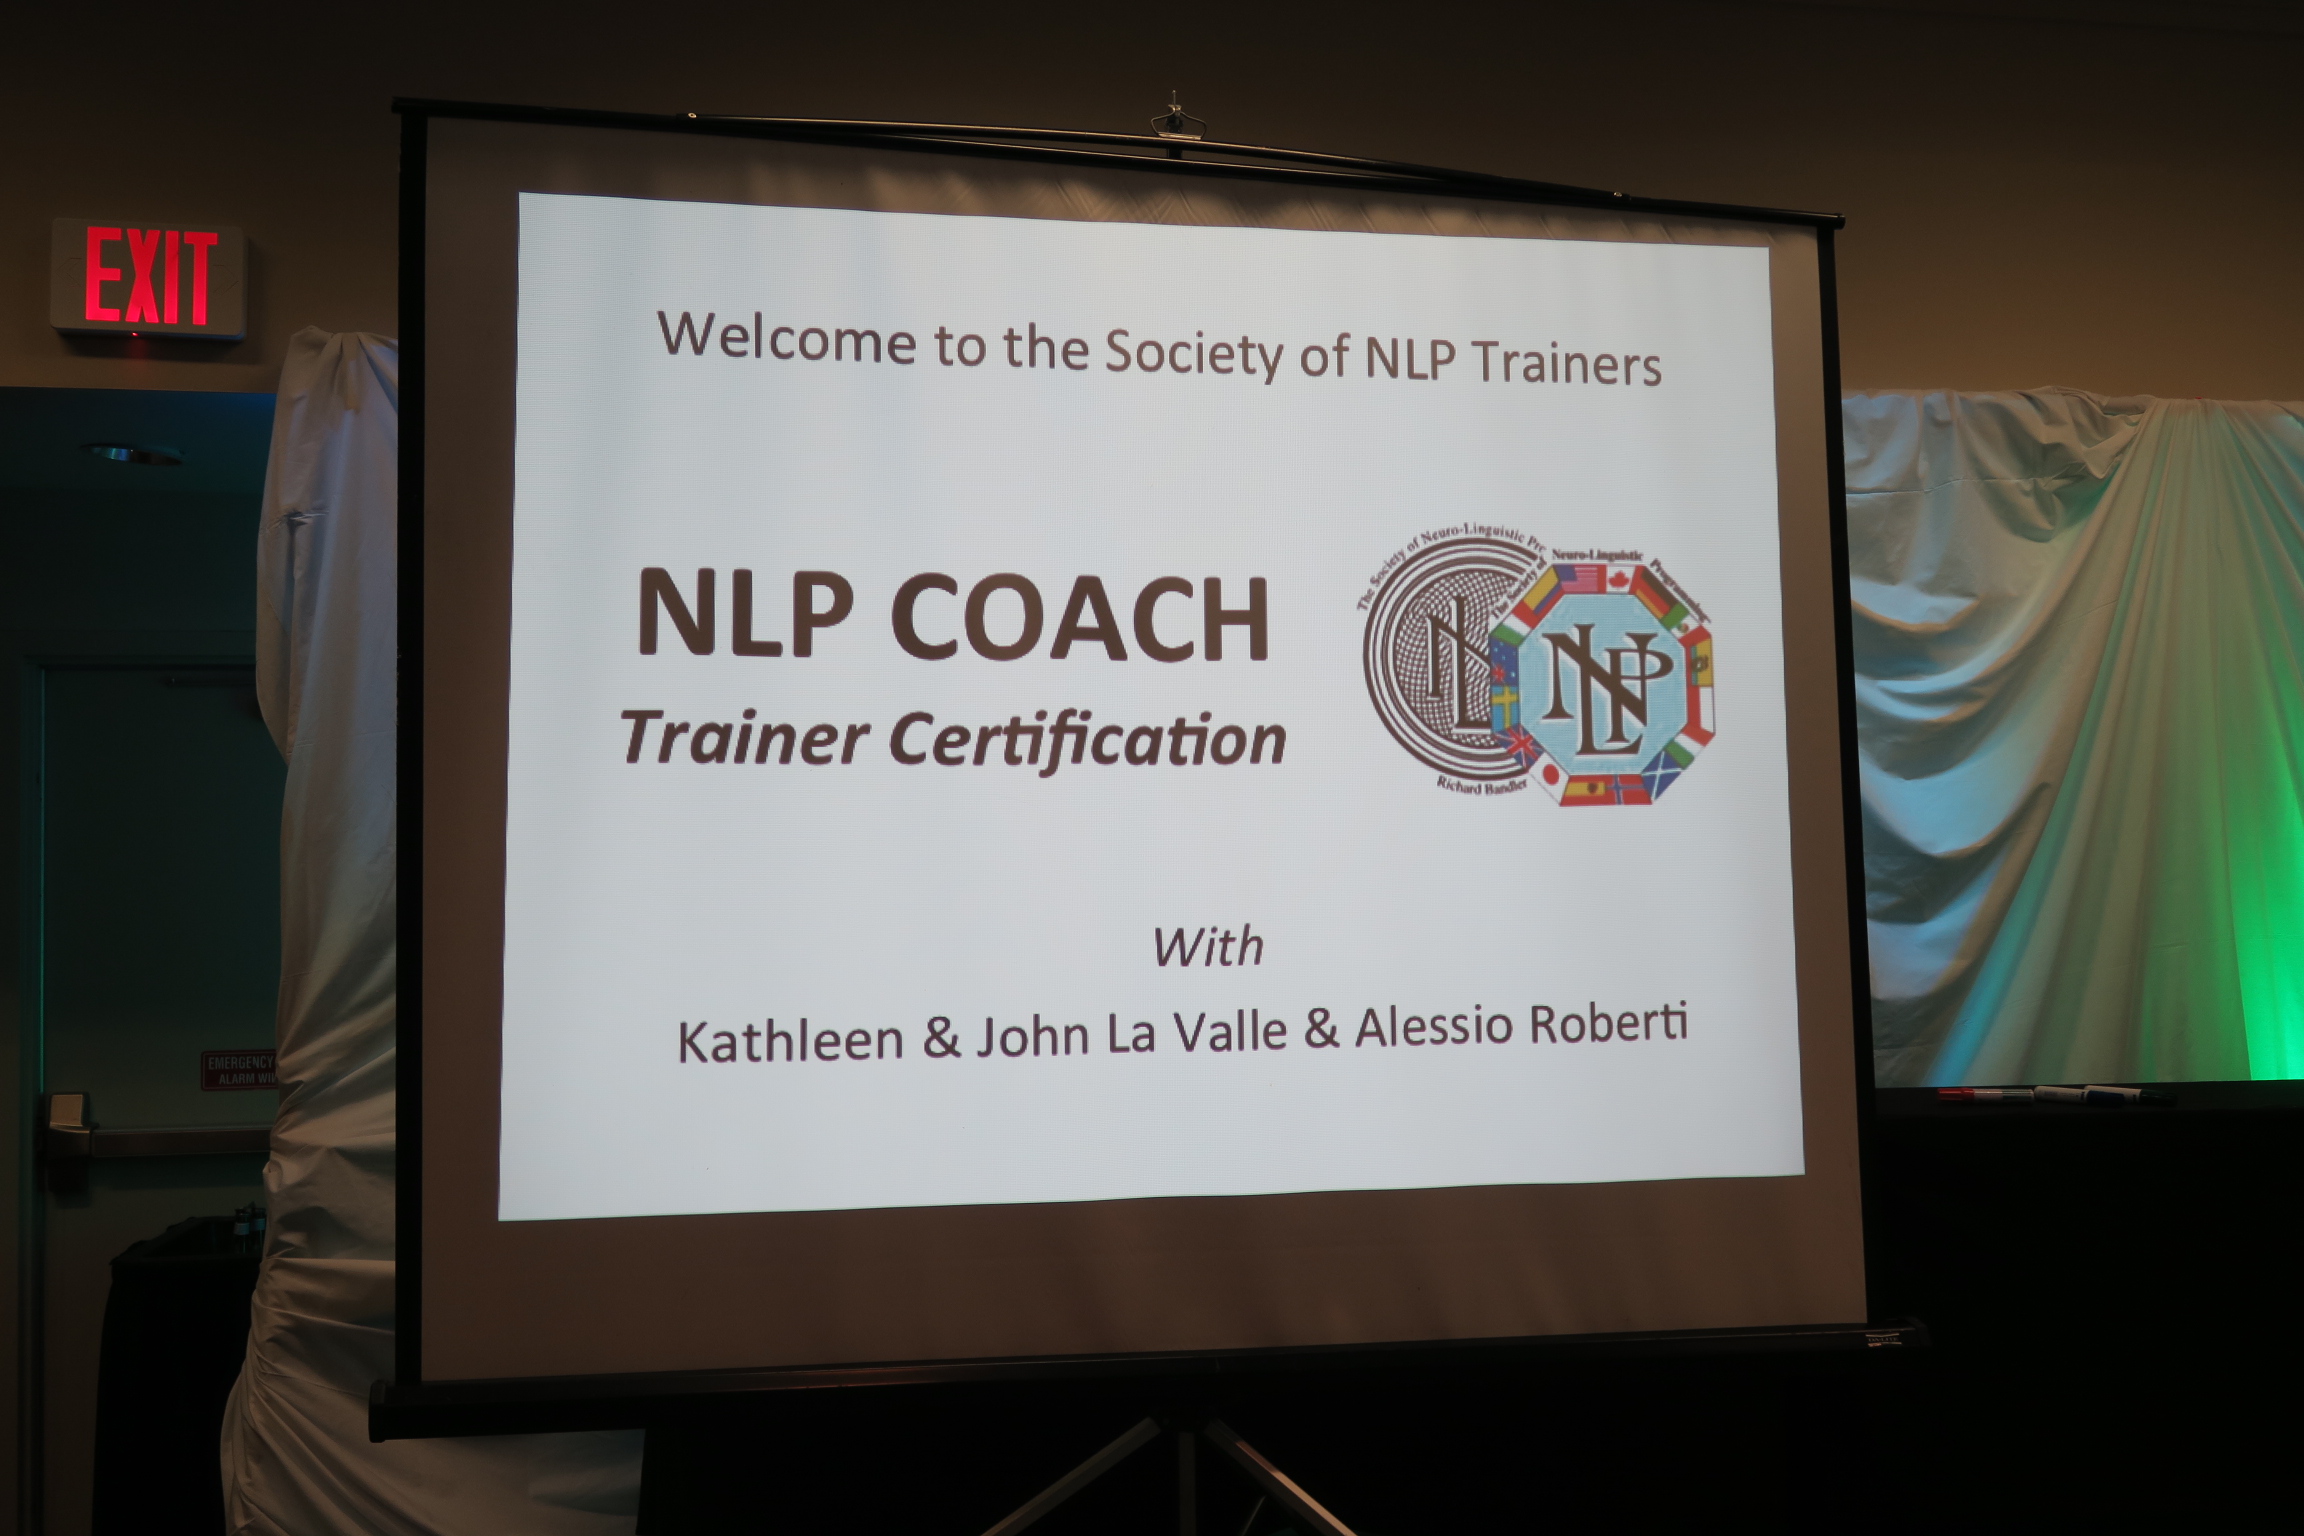 NLP COACH Trainer Certification